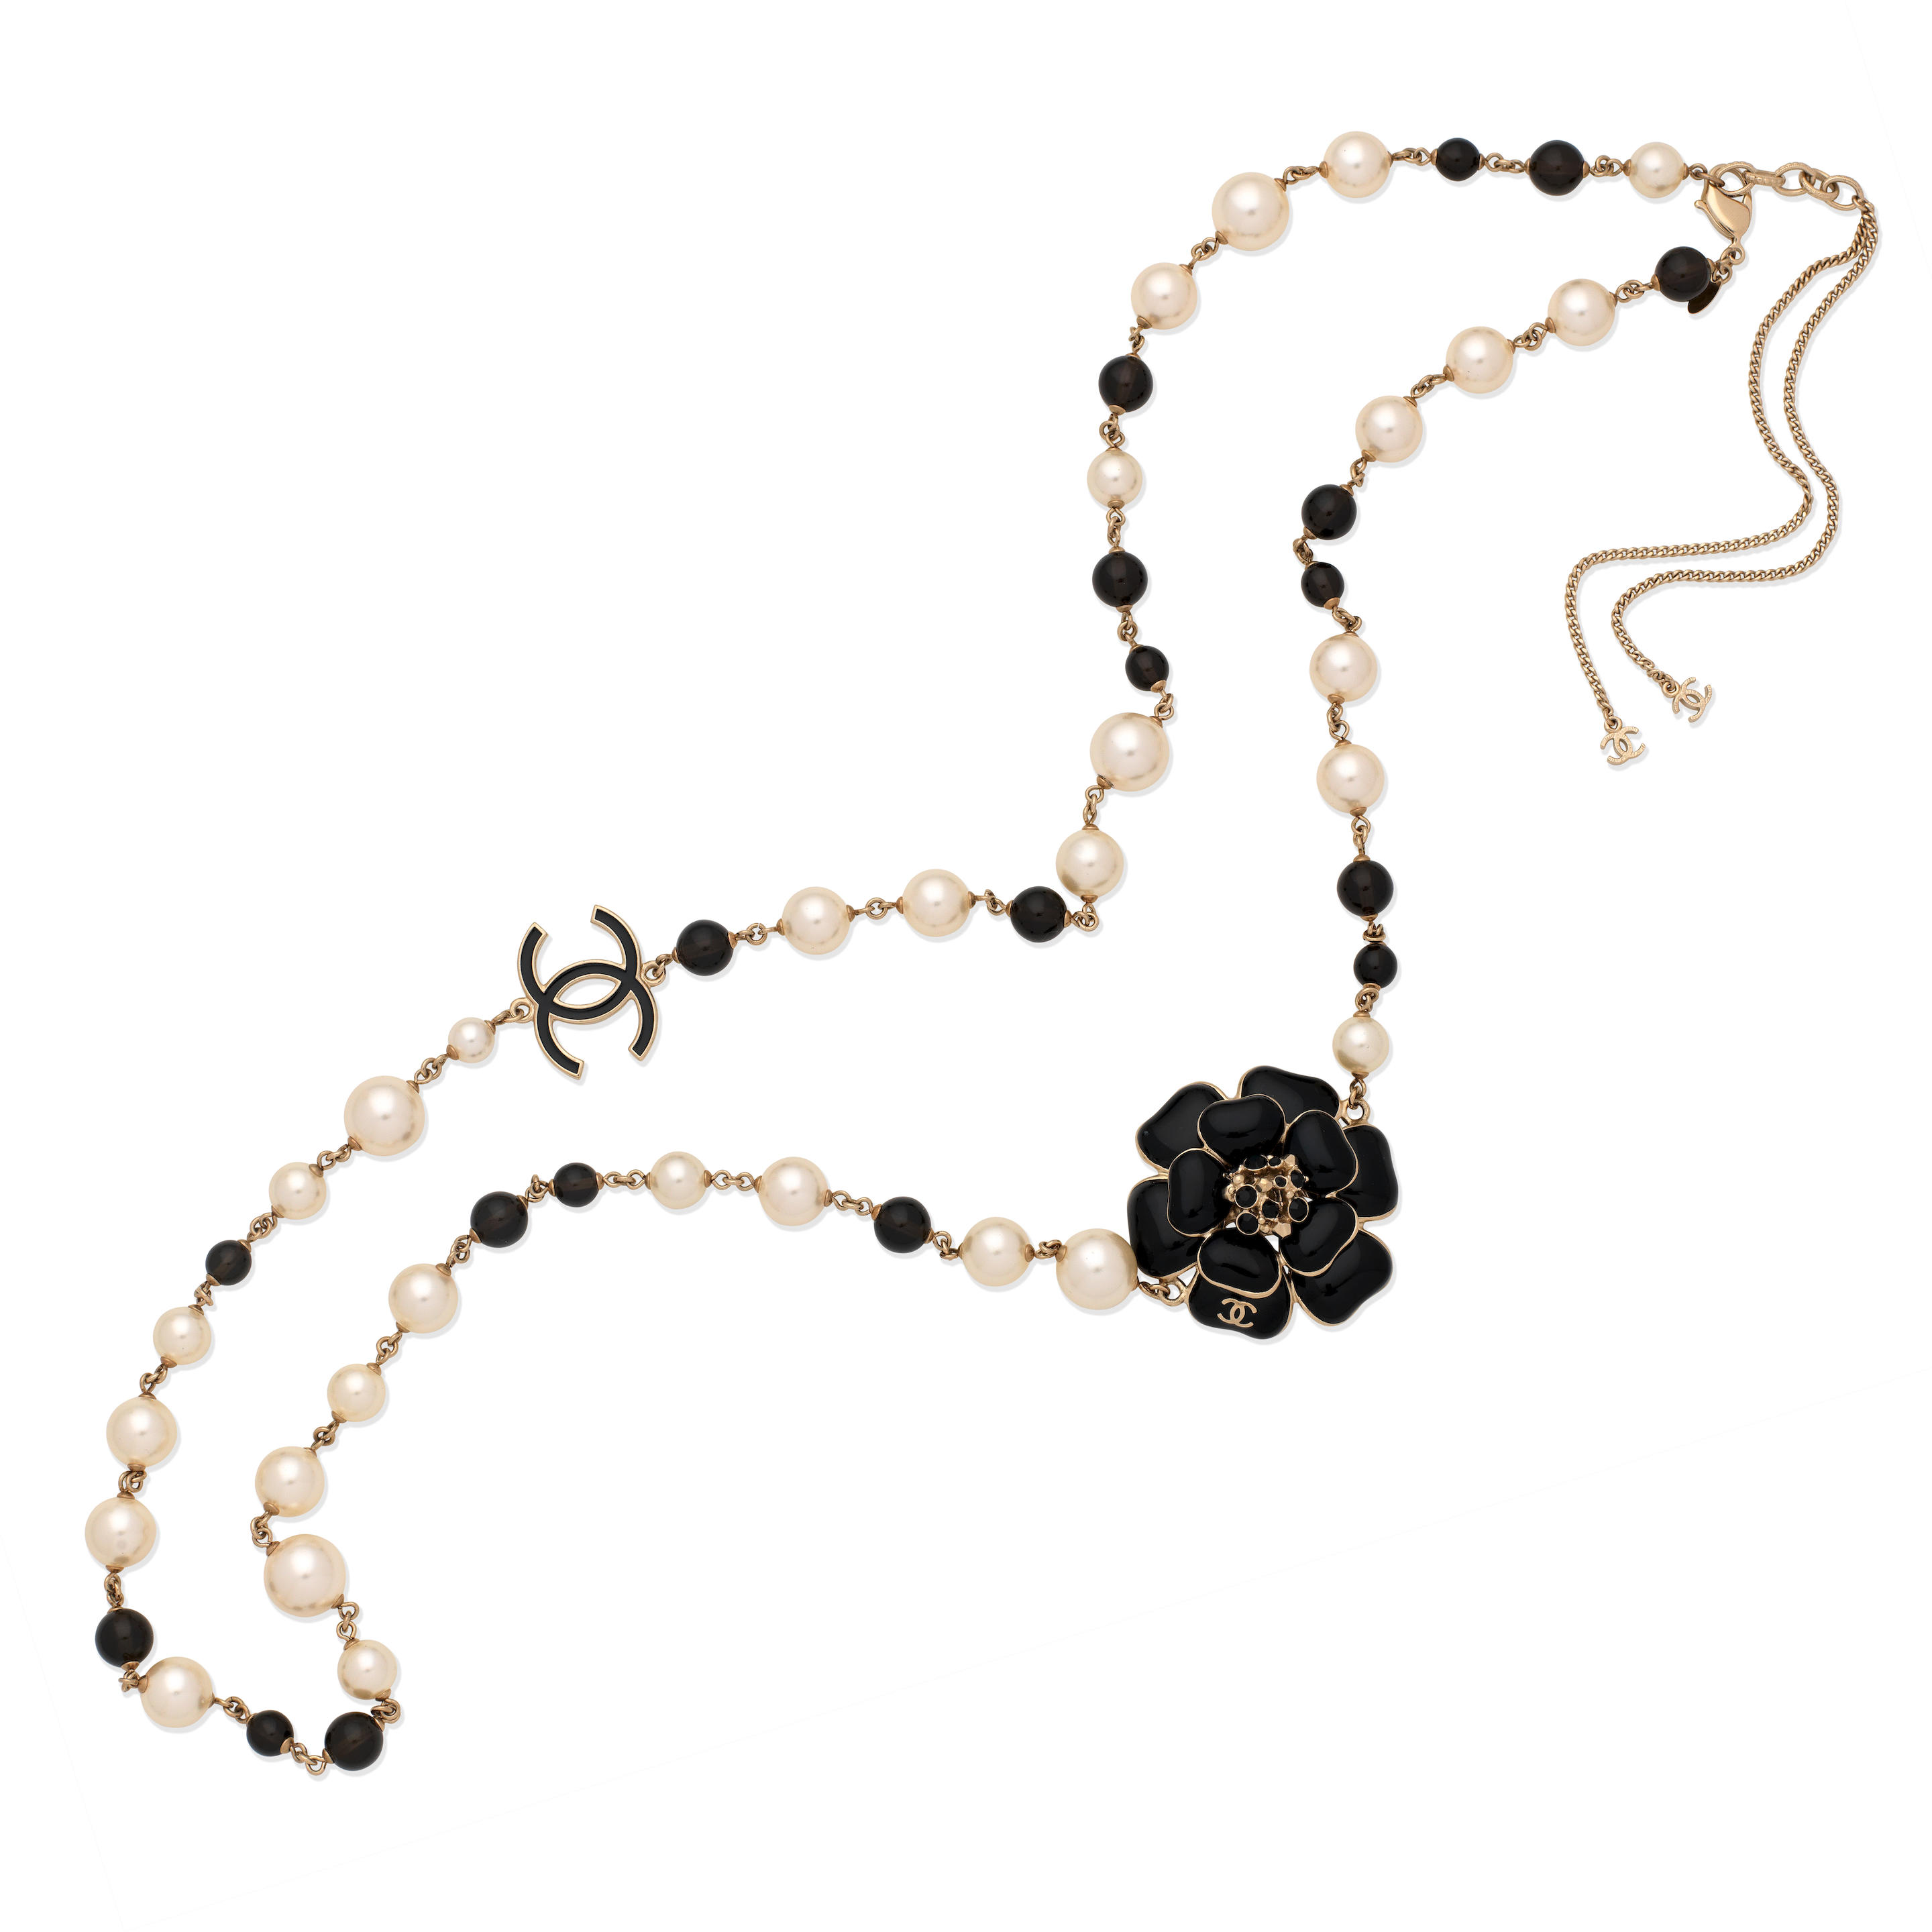 Clutch with chain - Lambskin, imitation pearls, enamel & gold-tone